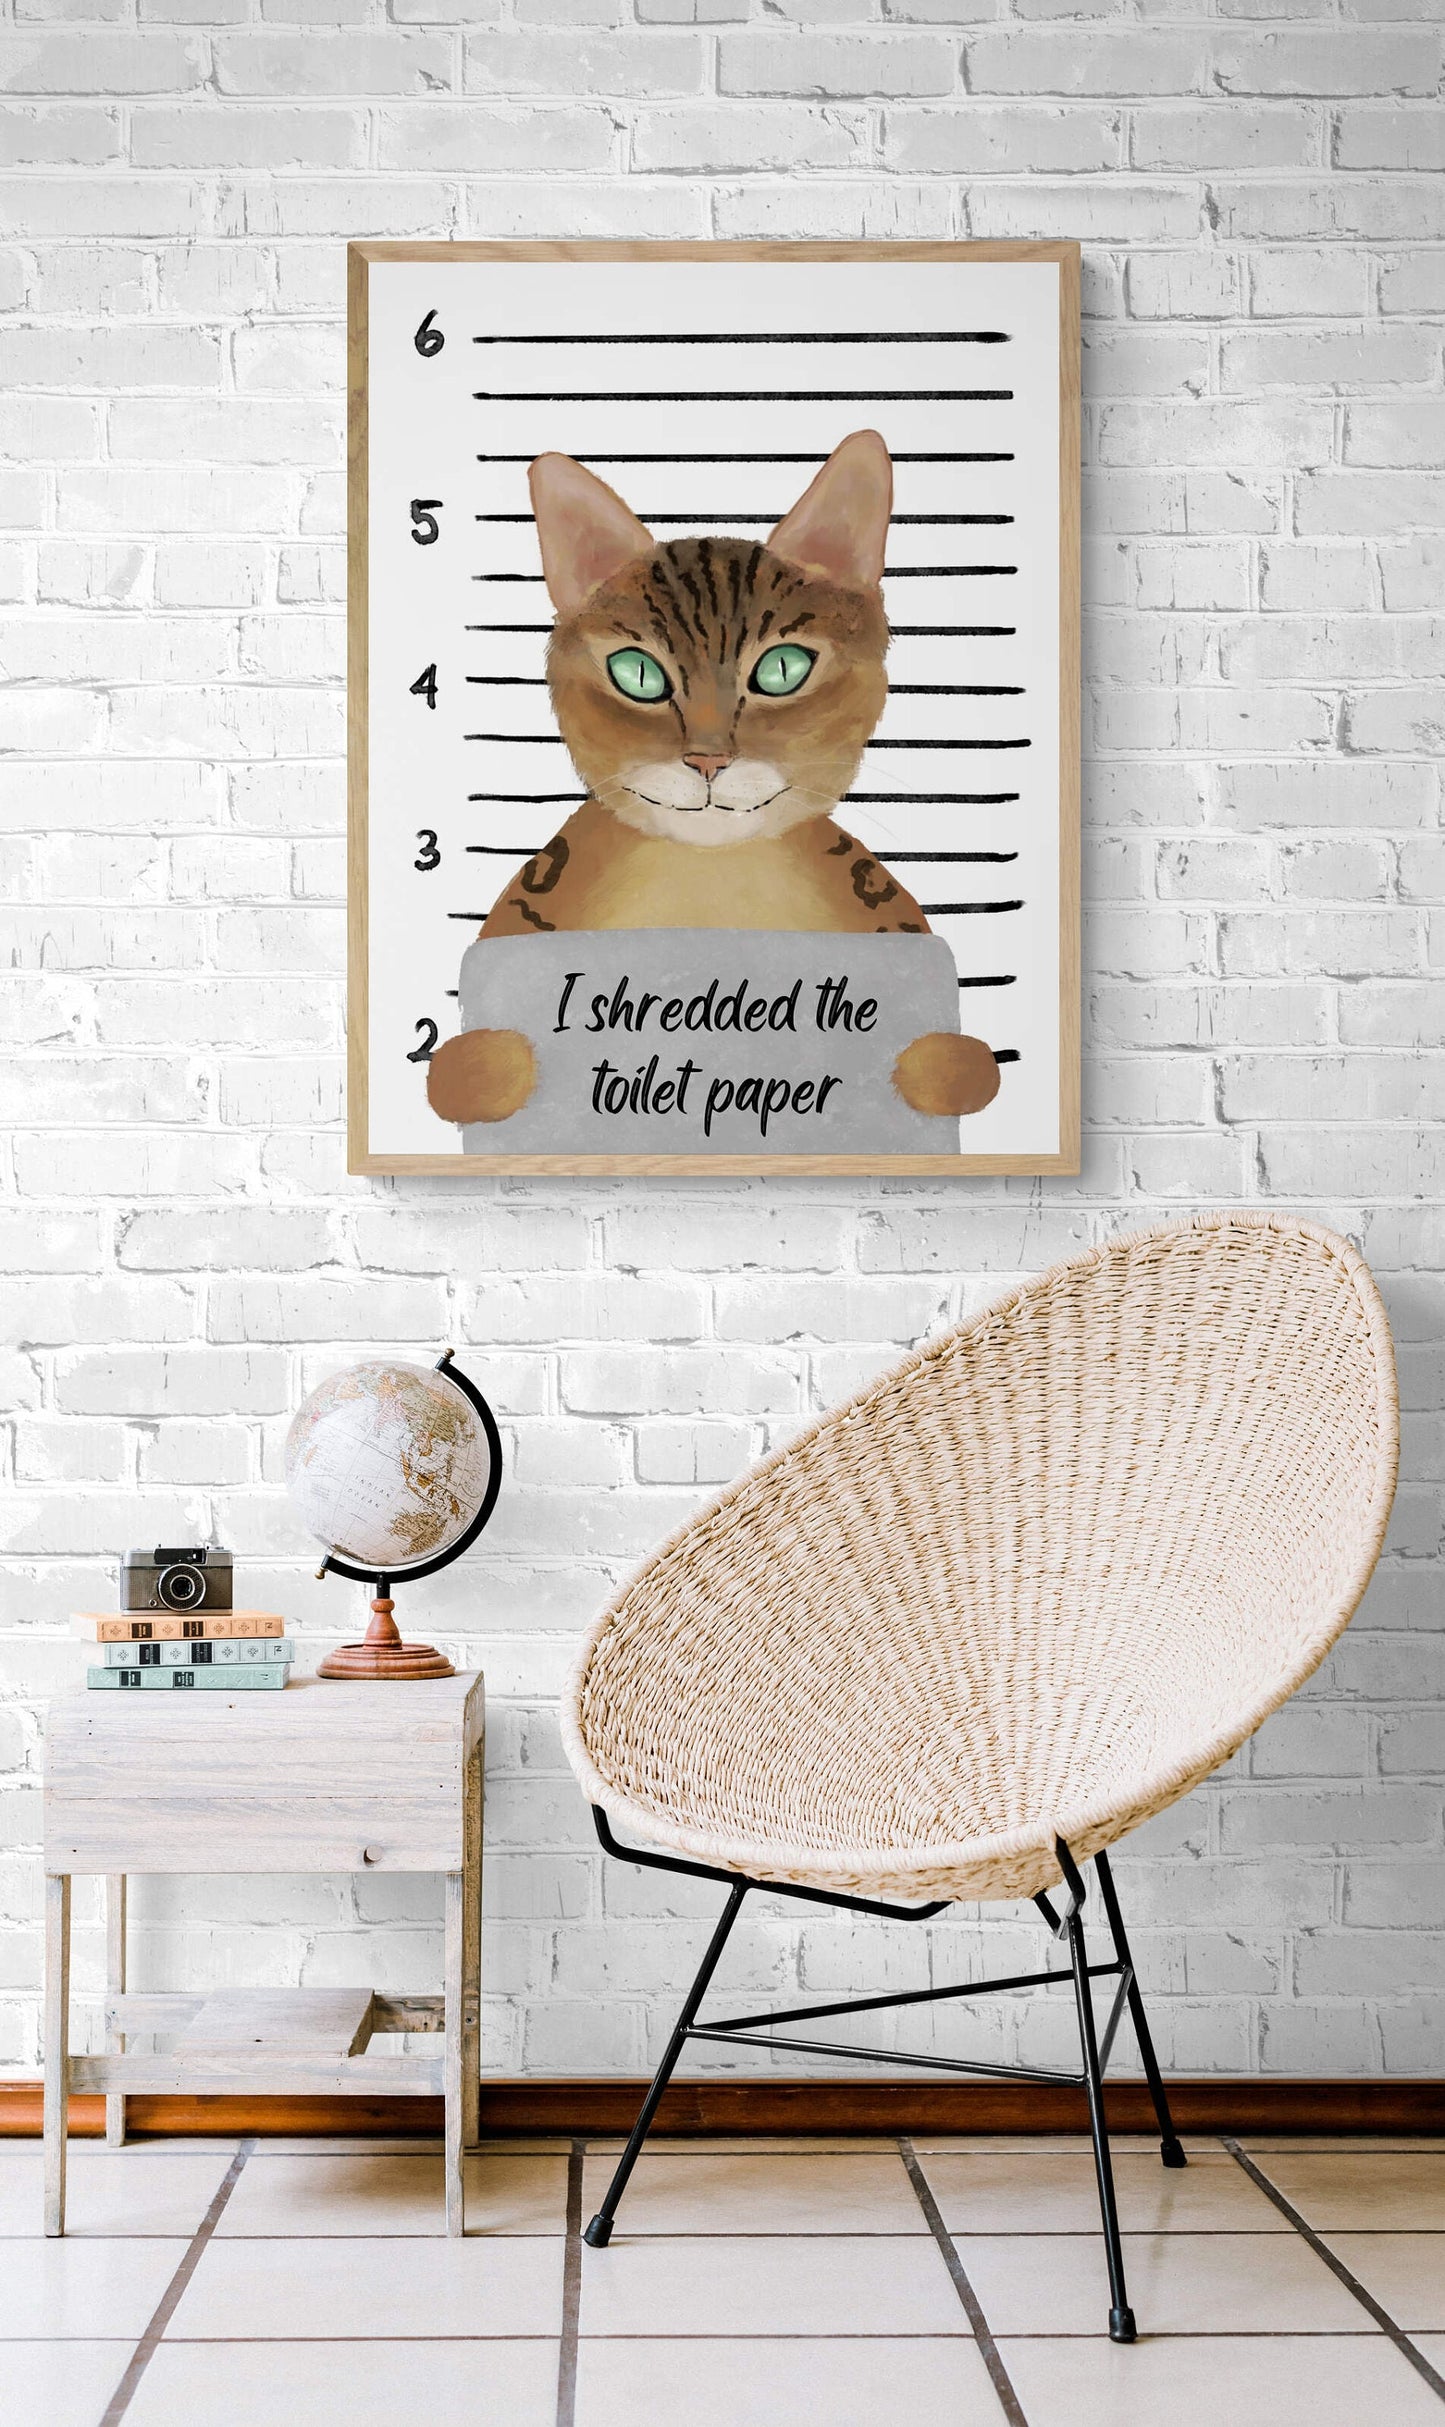 Gold Bengal Cat Mug Shot Print, Bengal Cat in Prison Artwork, Bathroom Painting, Cat With Toilet Paper Print, Cat Lover Gift, Funny Cat Gift